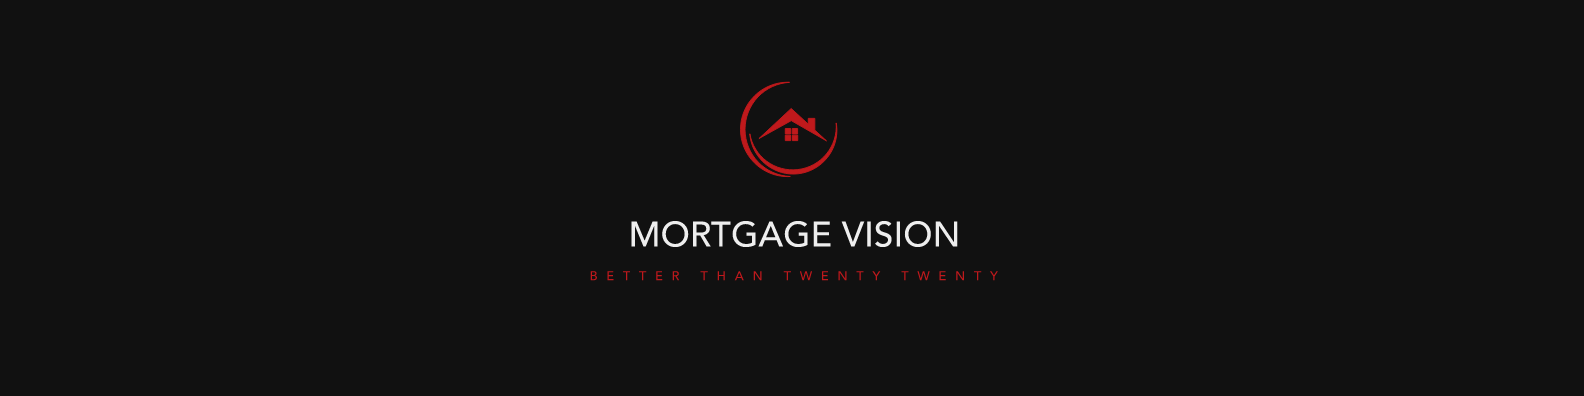 Mortgage Vision Banner